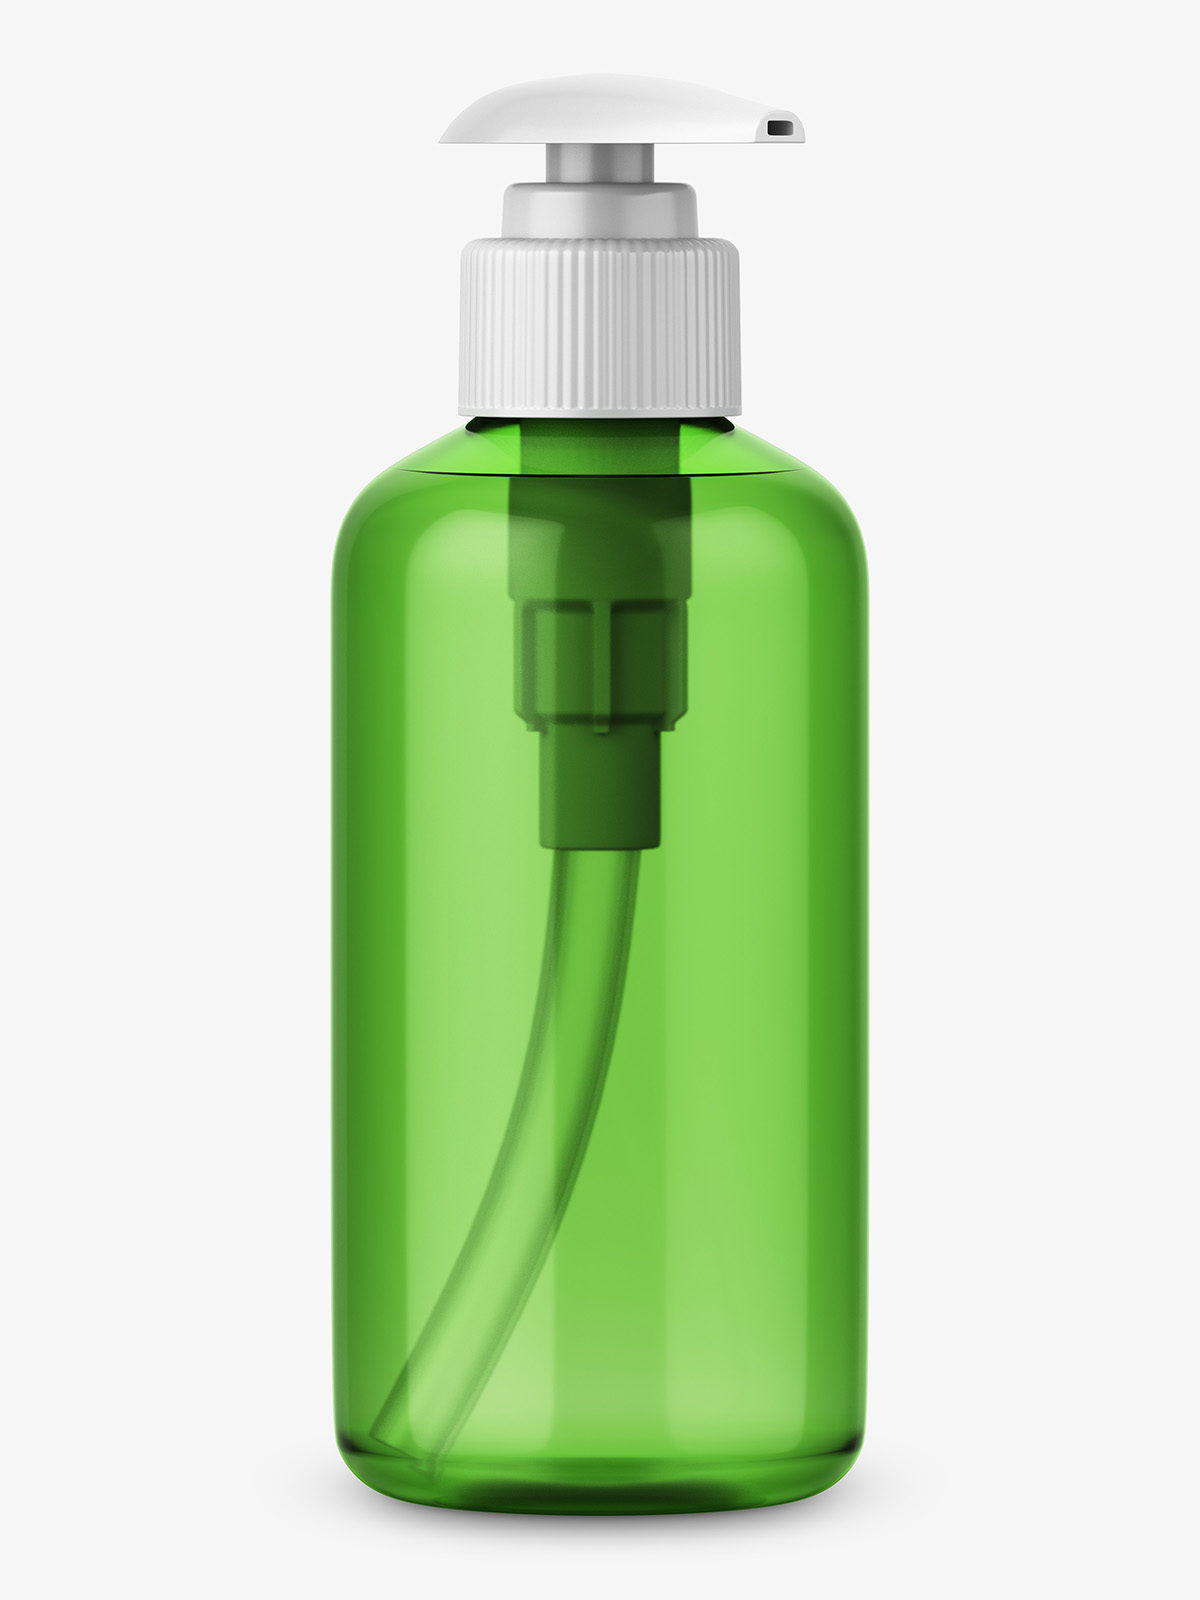 Download Green soap bottle with pump mockup - Smarty Mockups